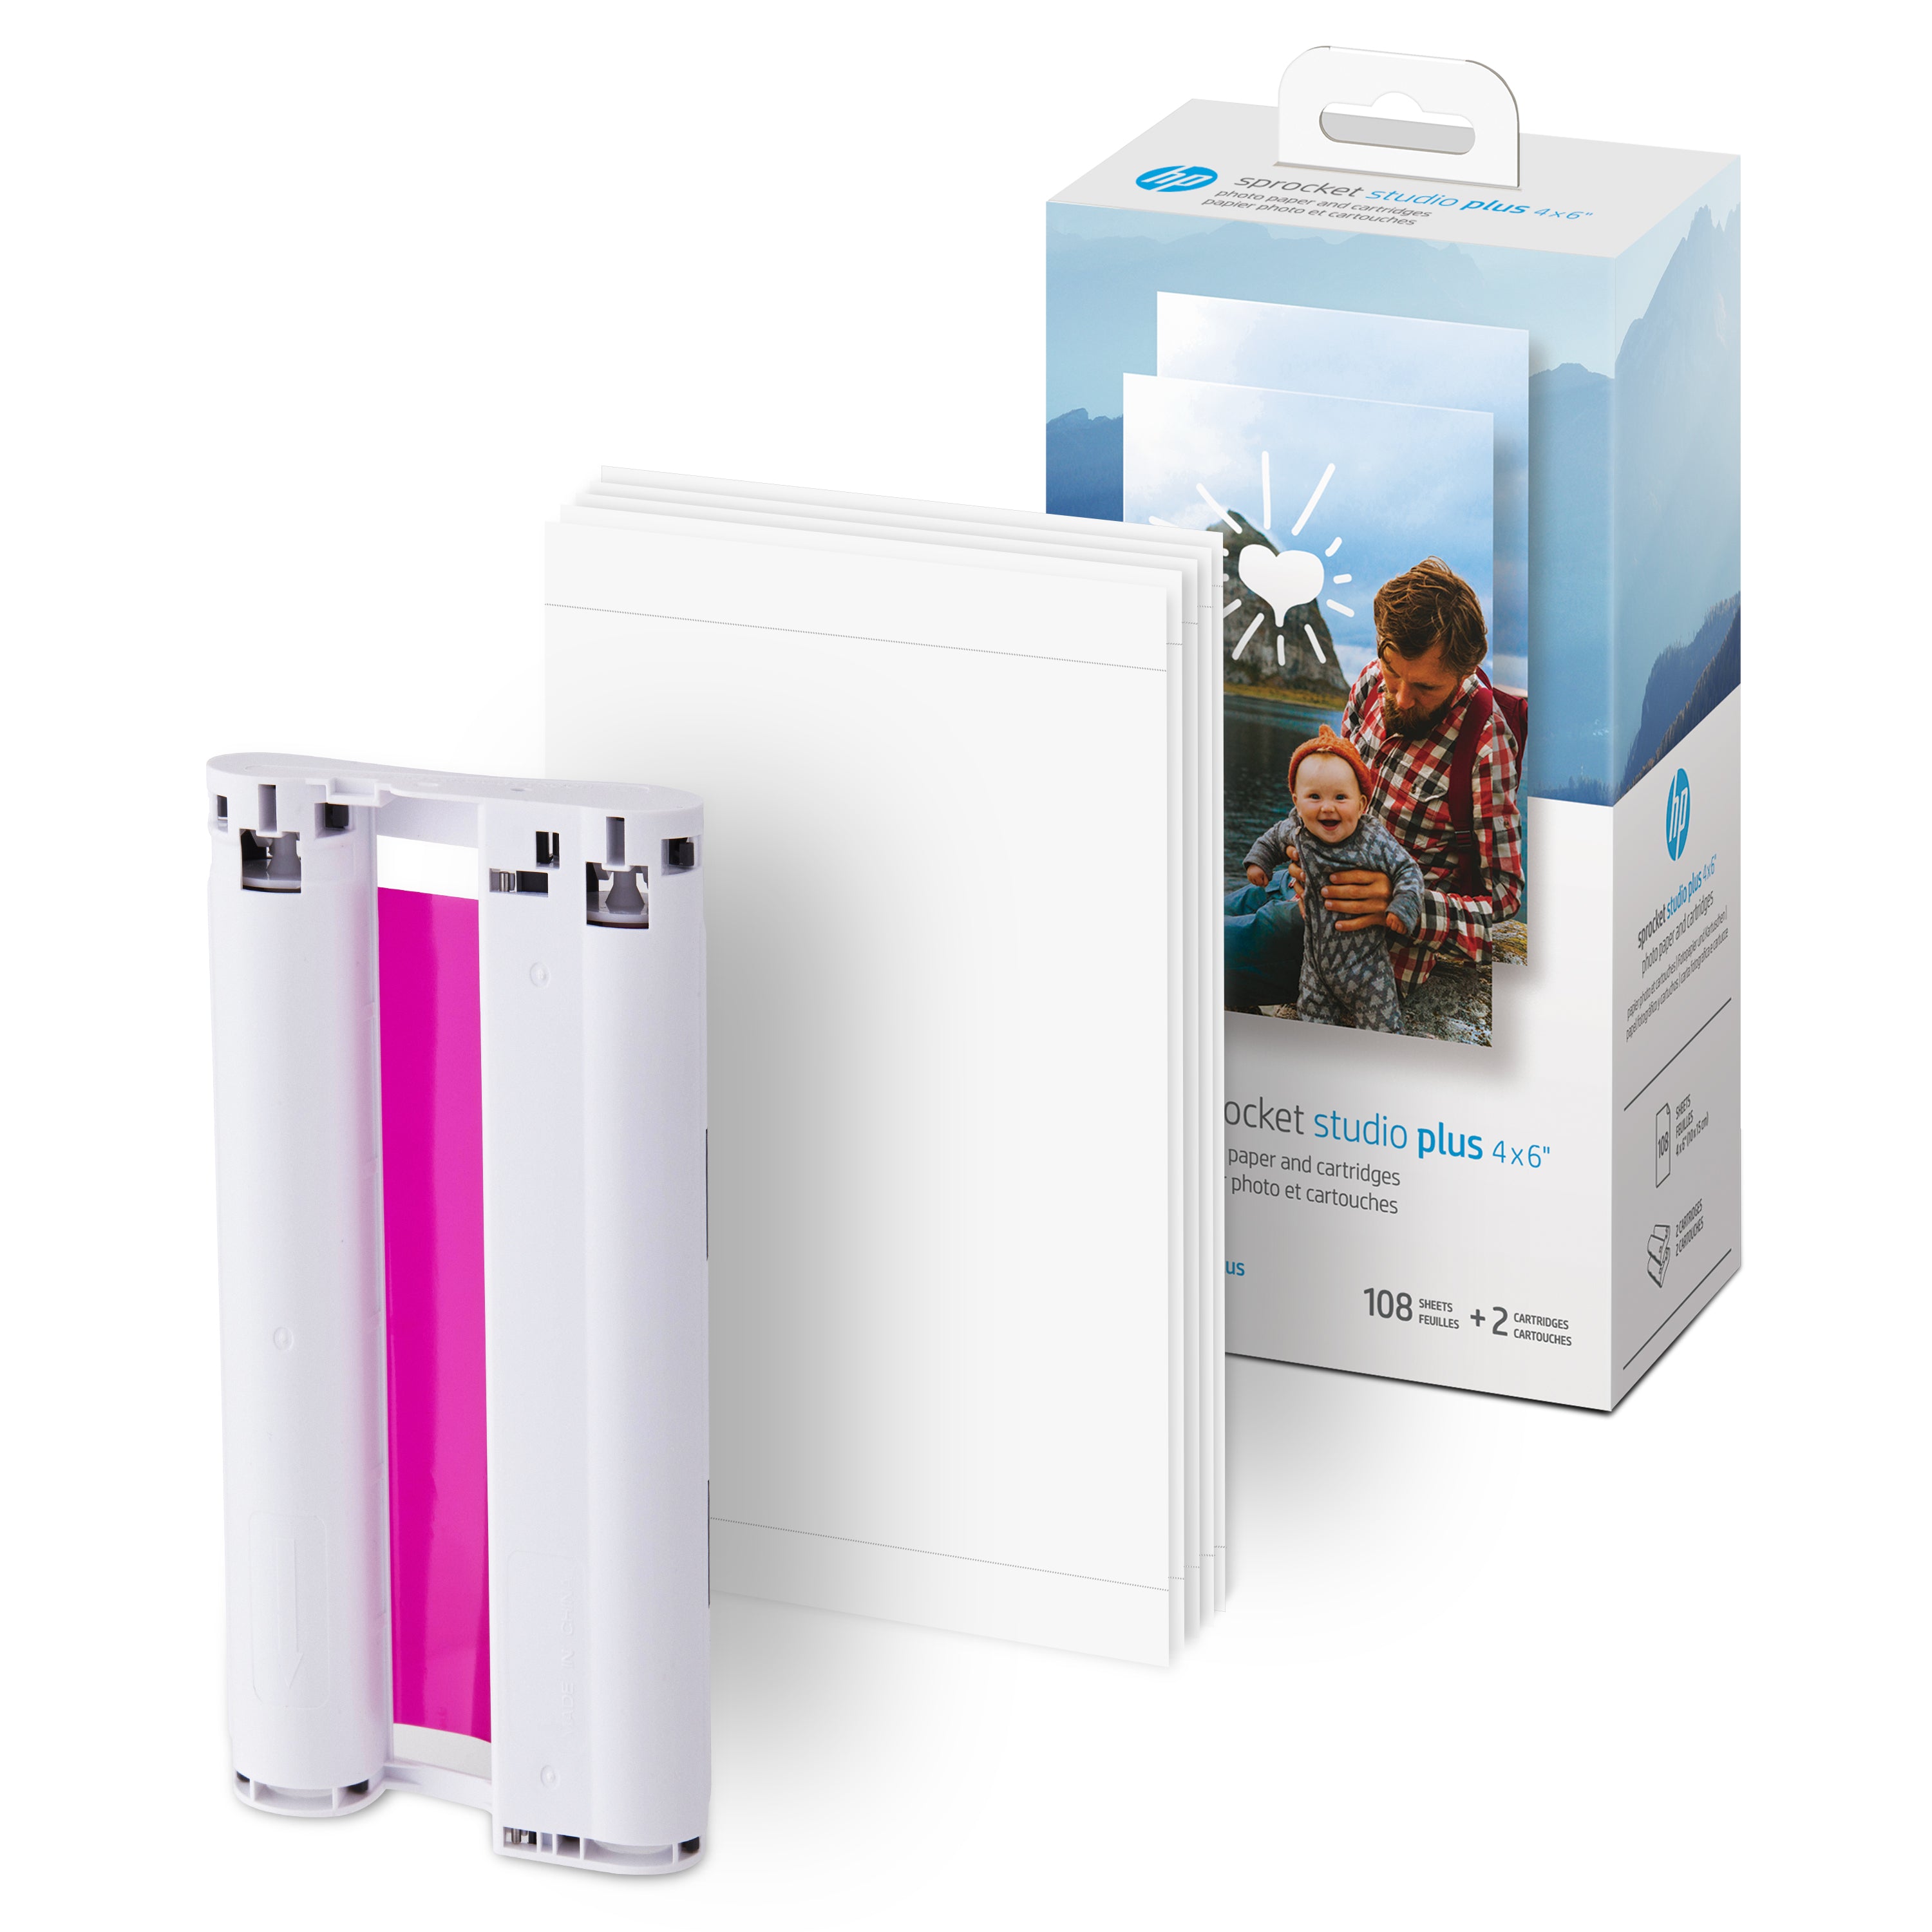 Papier photo HP Sprocket 2,3 x 3,4 Premium Zink Sticky Back (100 feuilles)